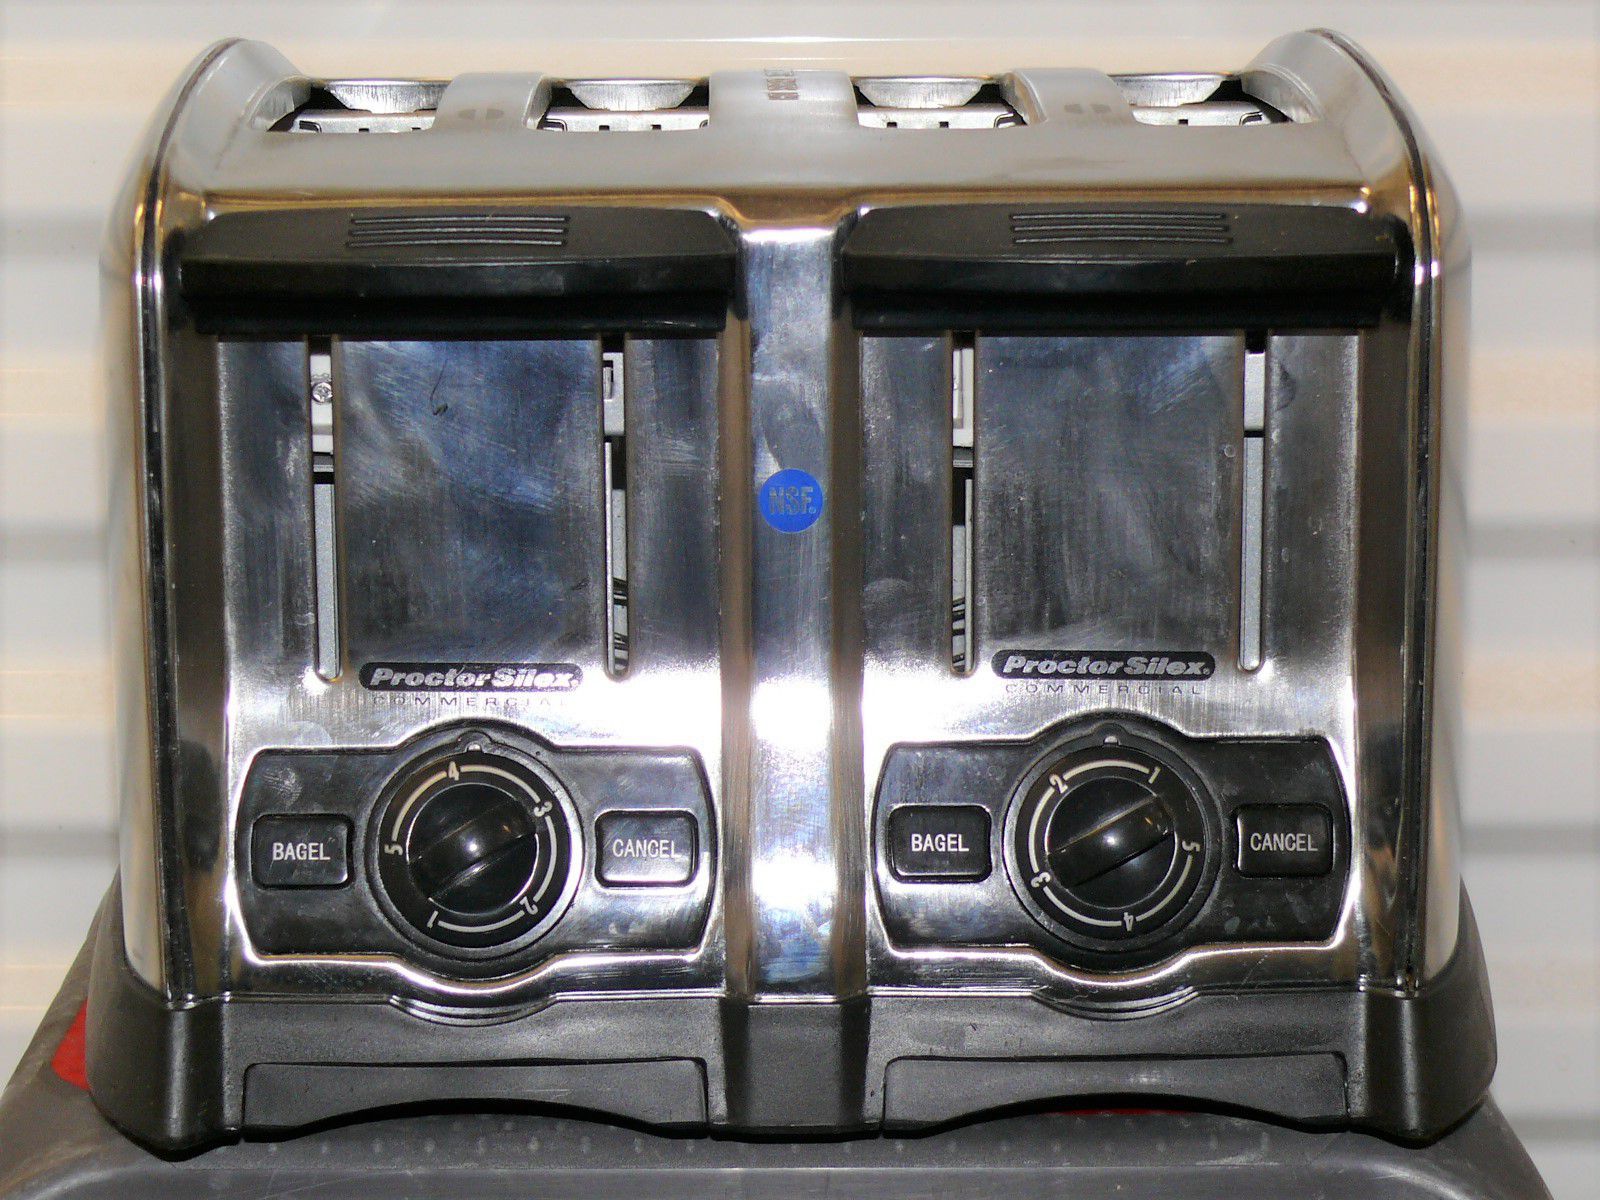 Proctor Silex 4 slot toaster